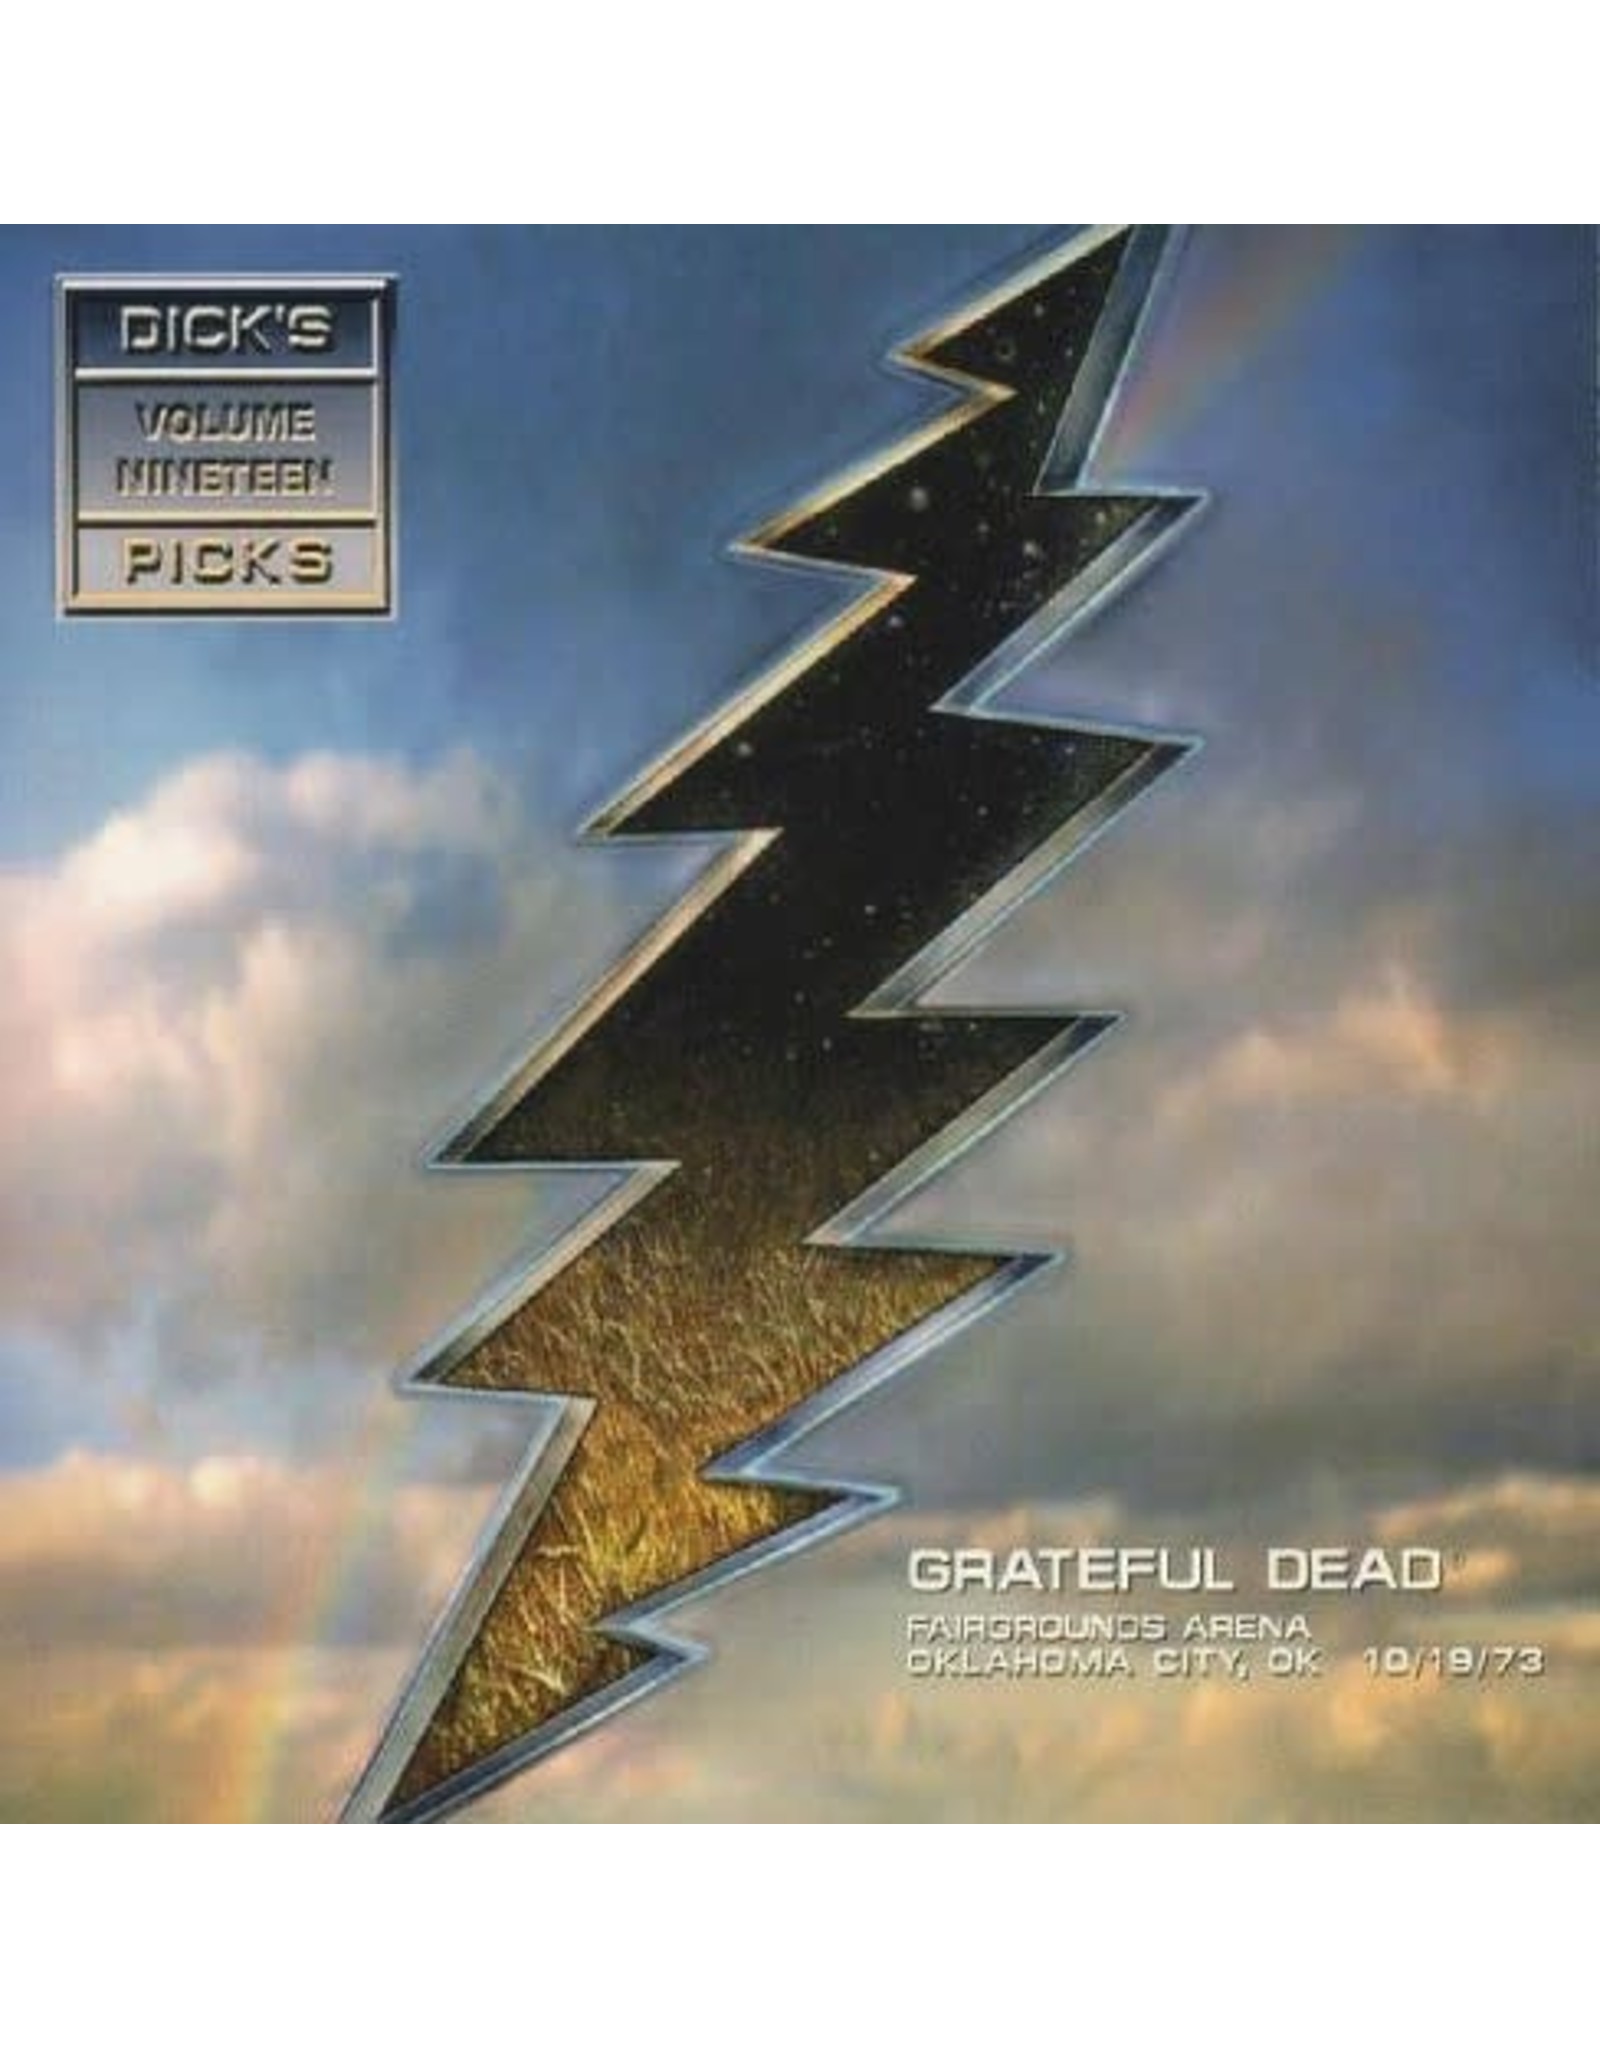 Grateful Dead - Dick's Picks Vol. 19 (Oklahoma City, OK 10/19/73) 6 LP Boxset